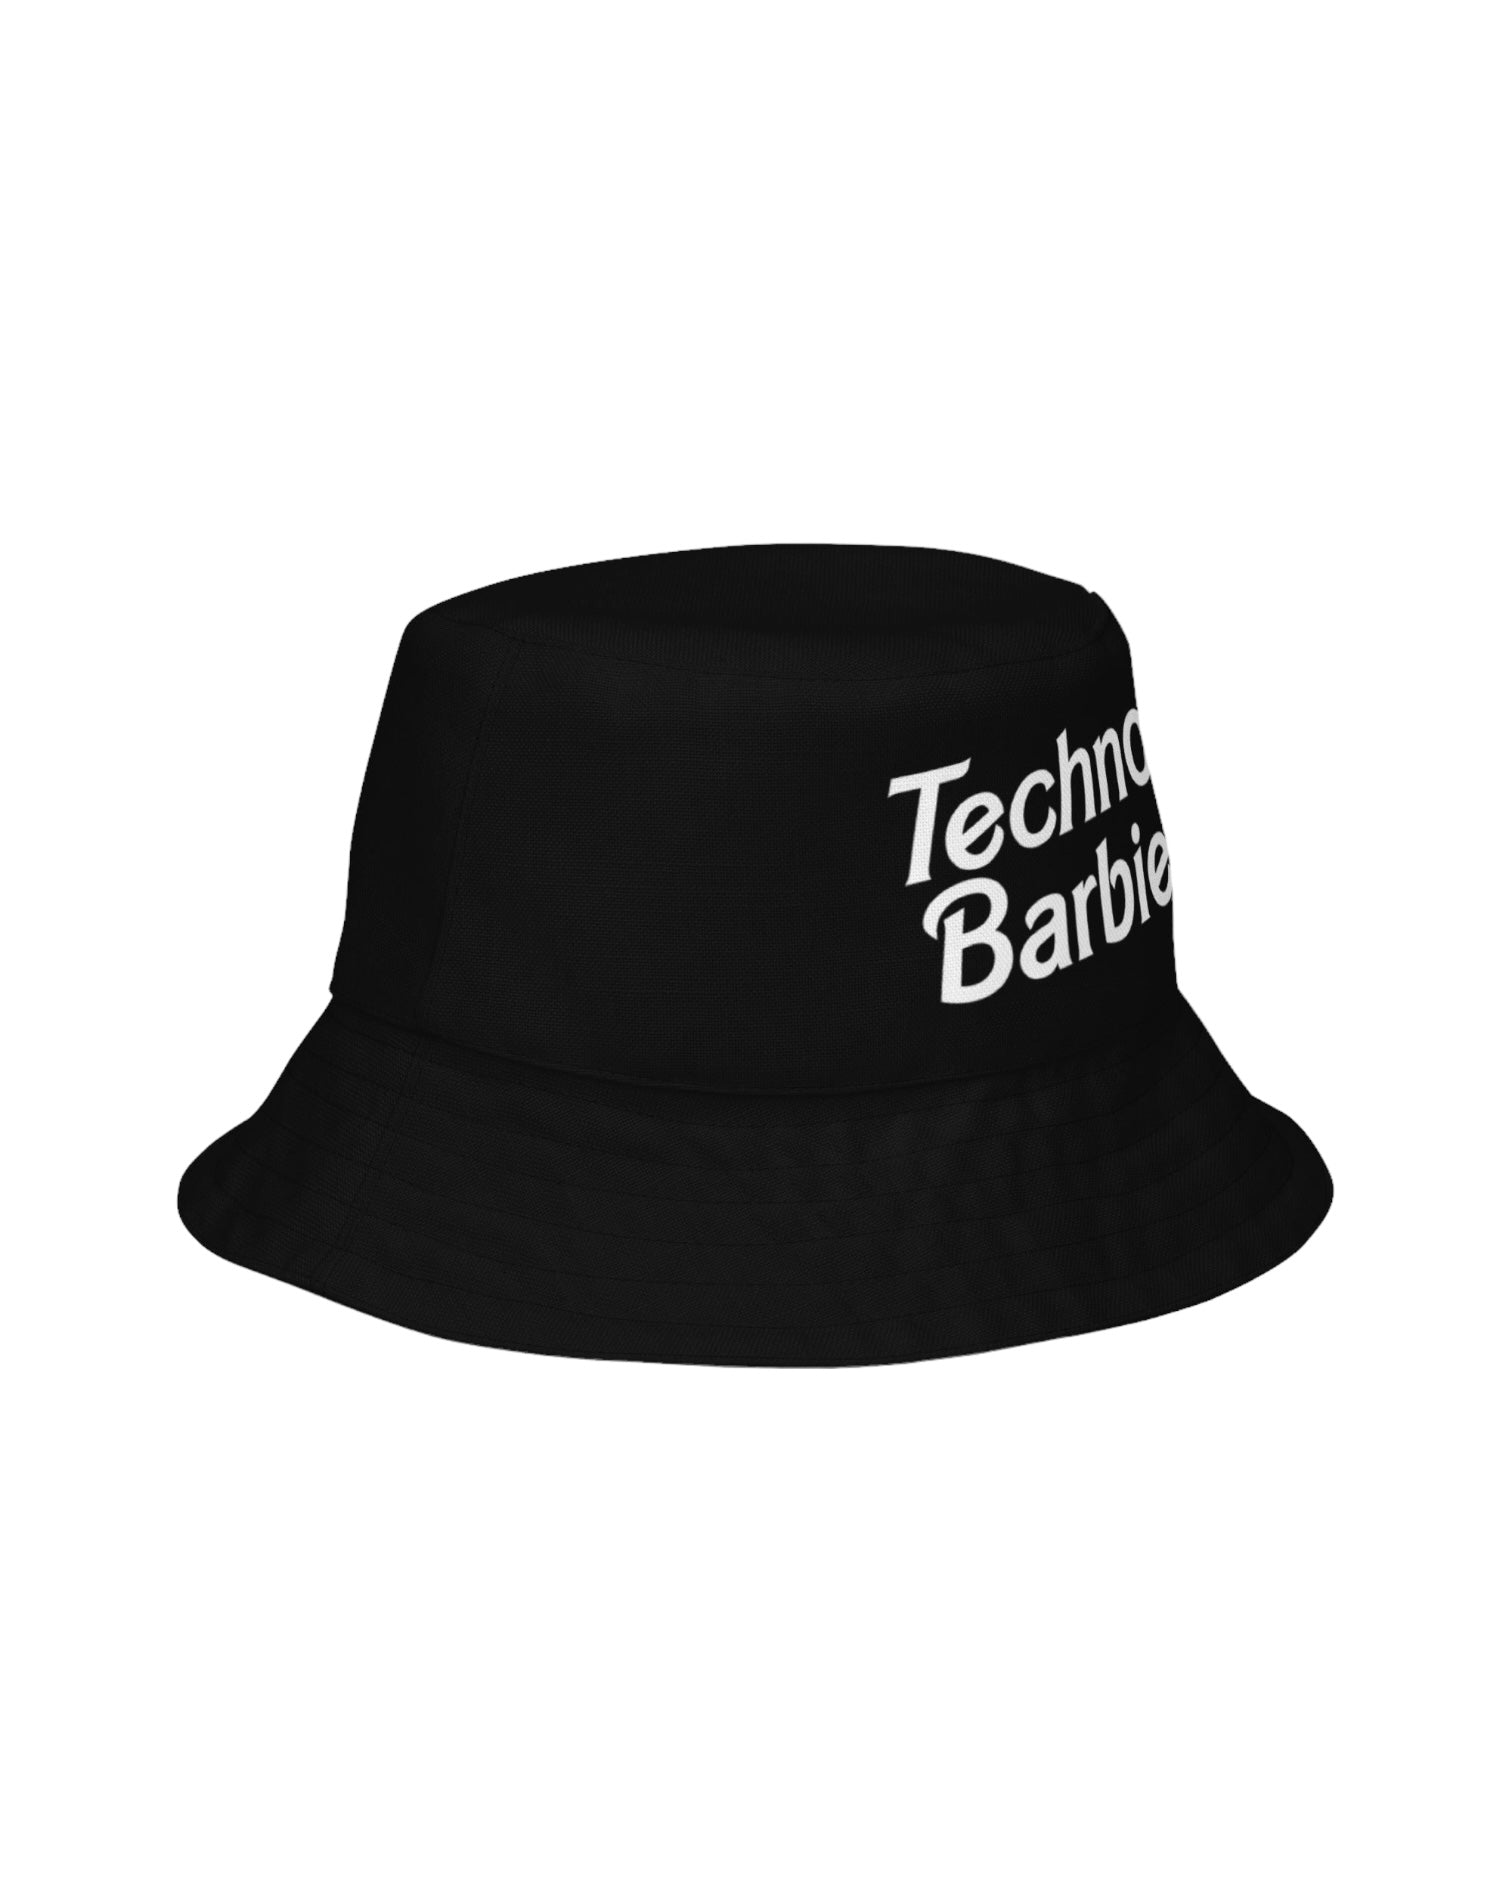 Techno Black Bucket Hat